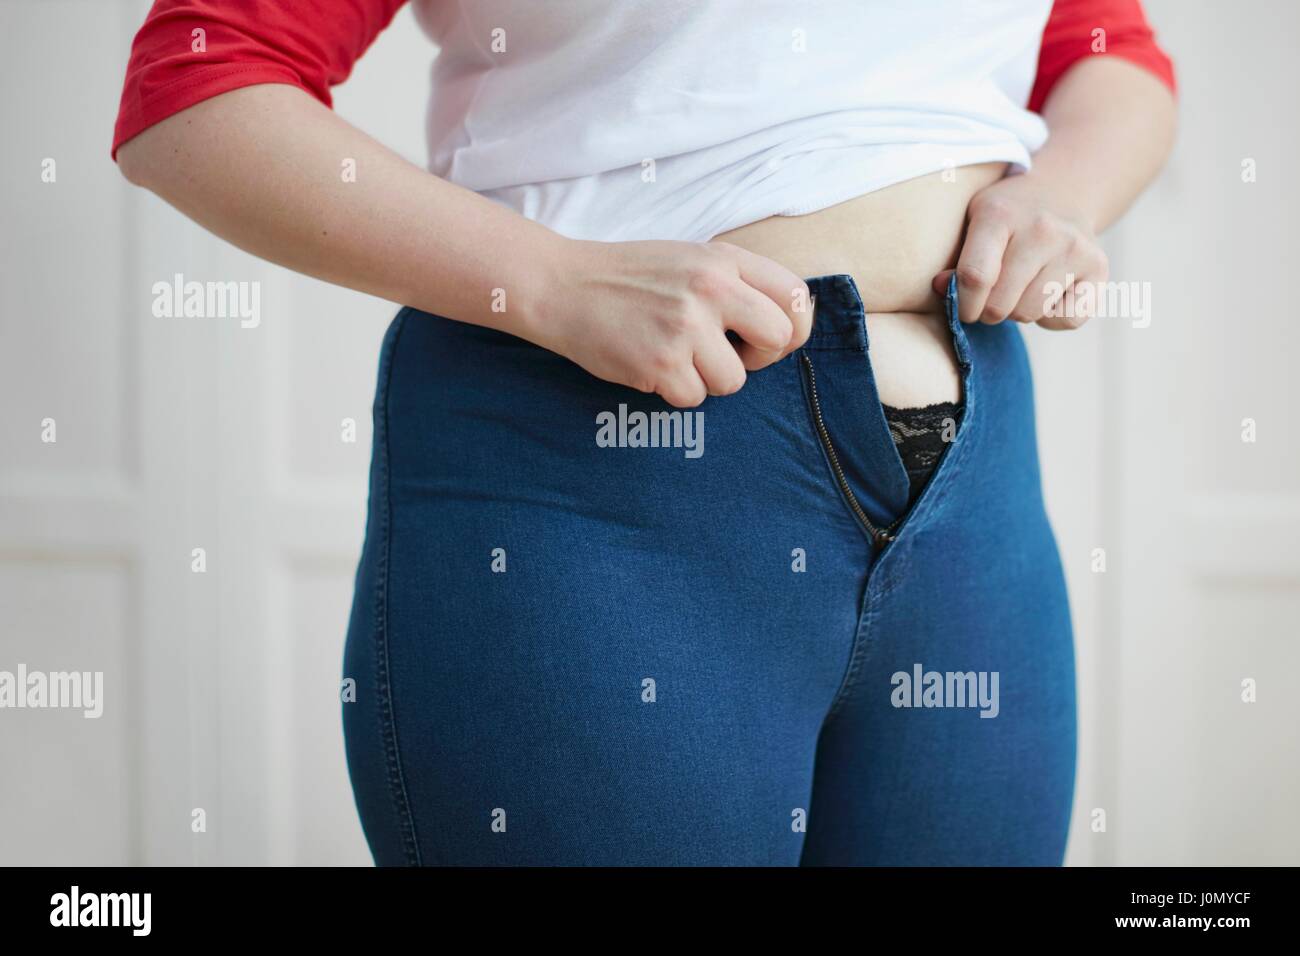 https://c8.alamy.com/comp/J0MYCF/woman-trying-to-button-jeans-over-tummy-J0MYCF.jpg